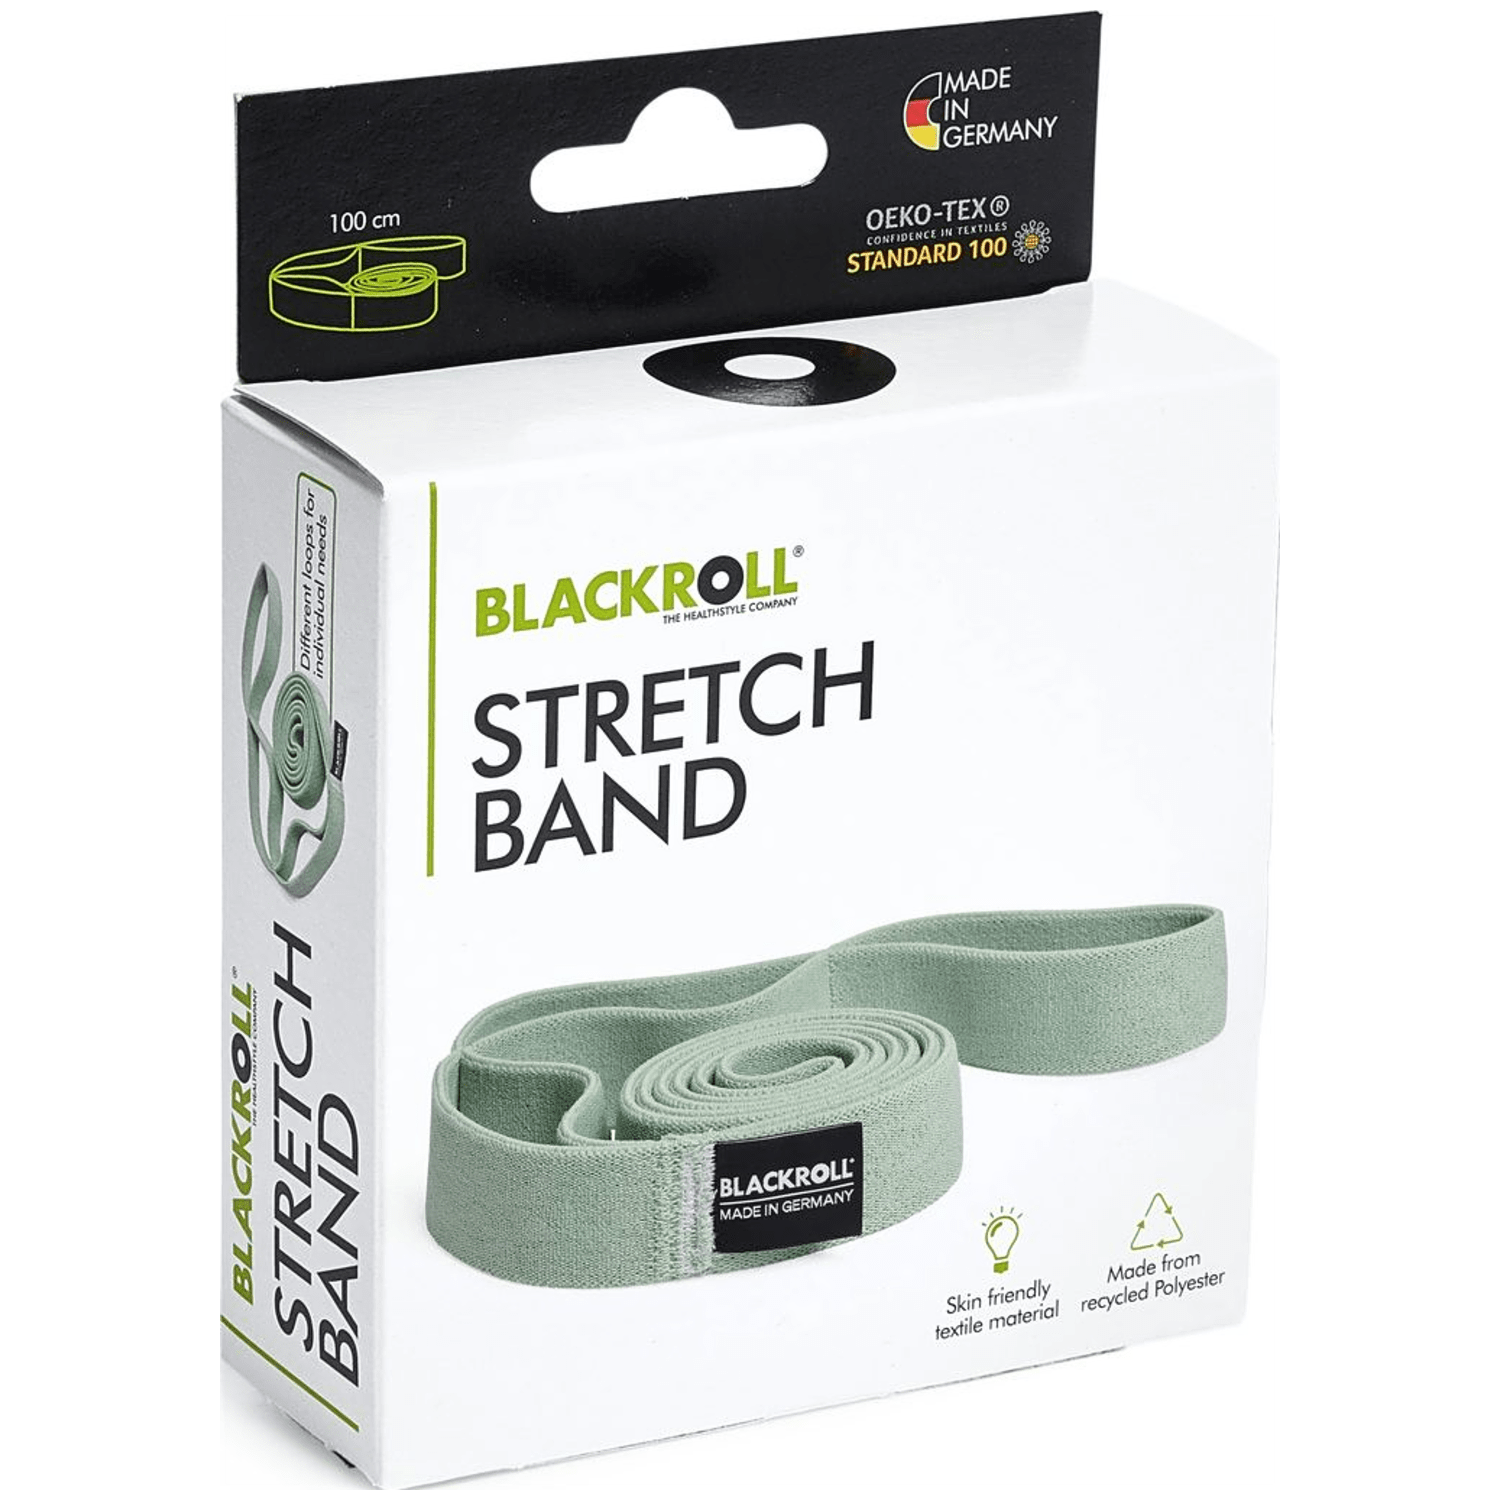 Blackroll Stretch Band Unisex Fitnessgerät